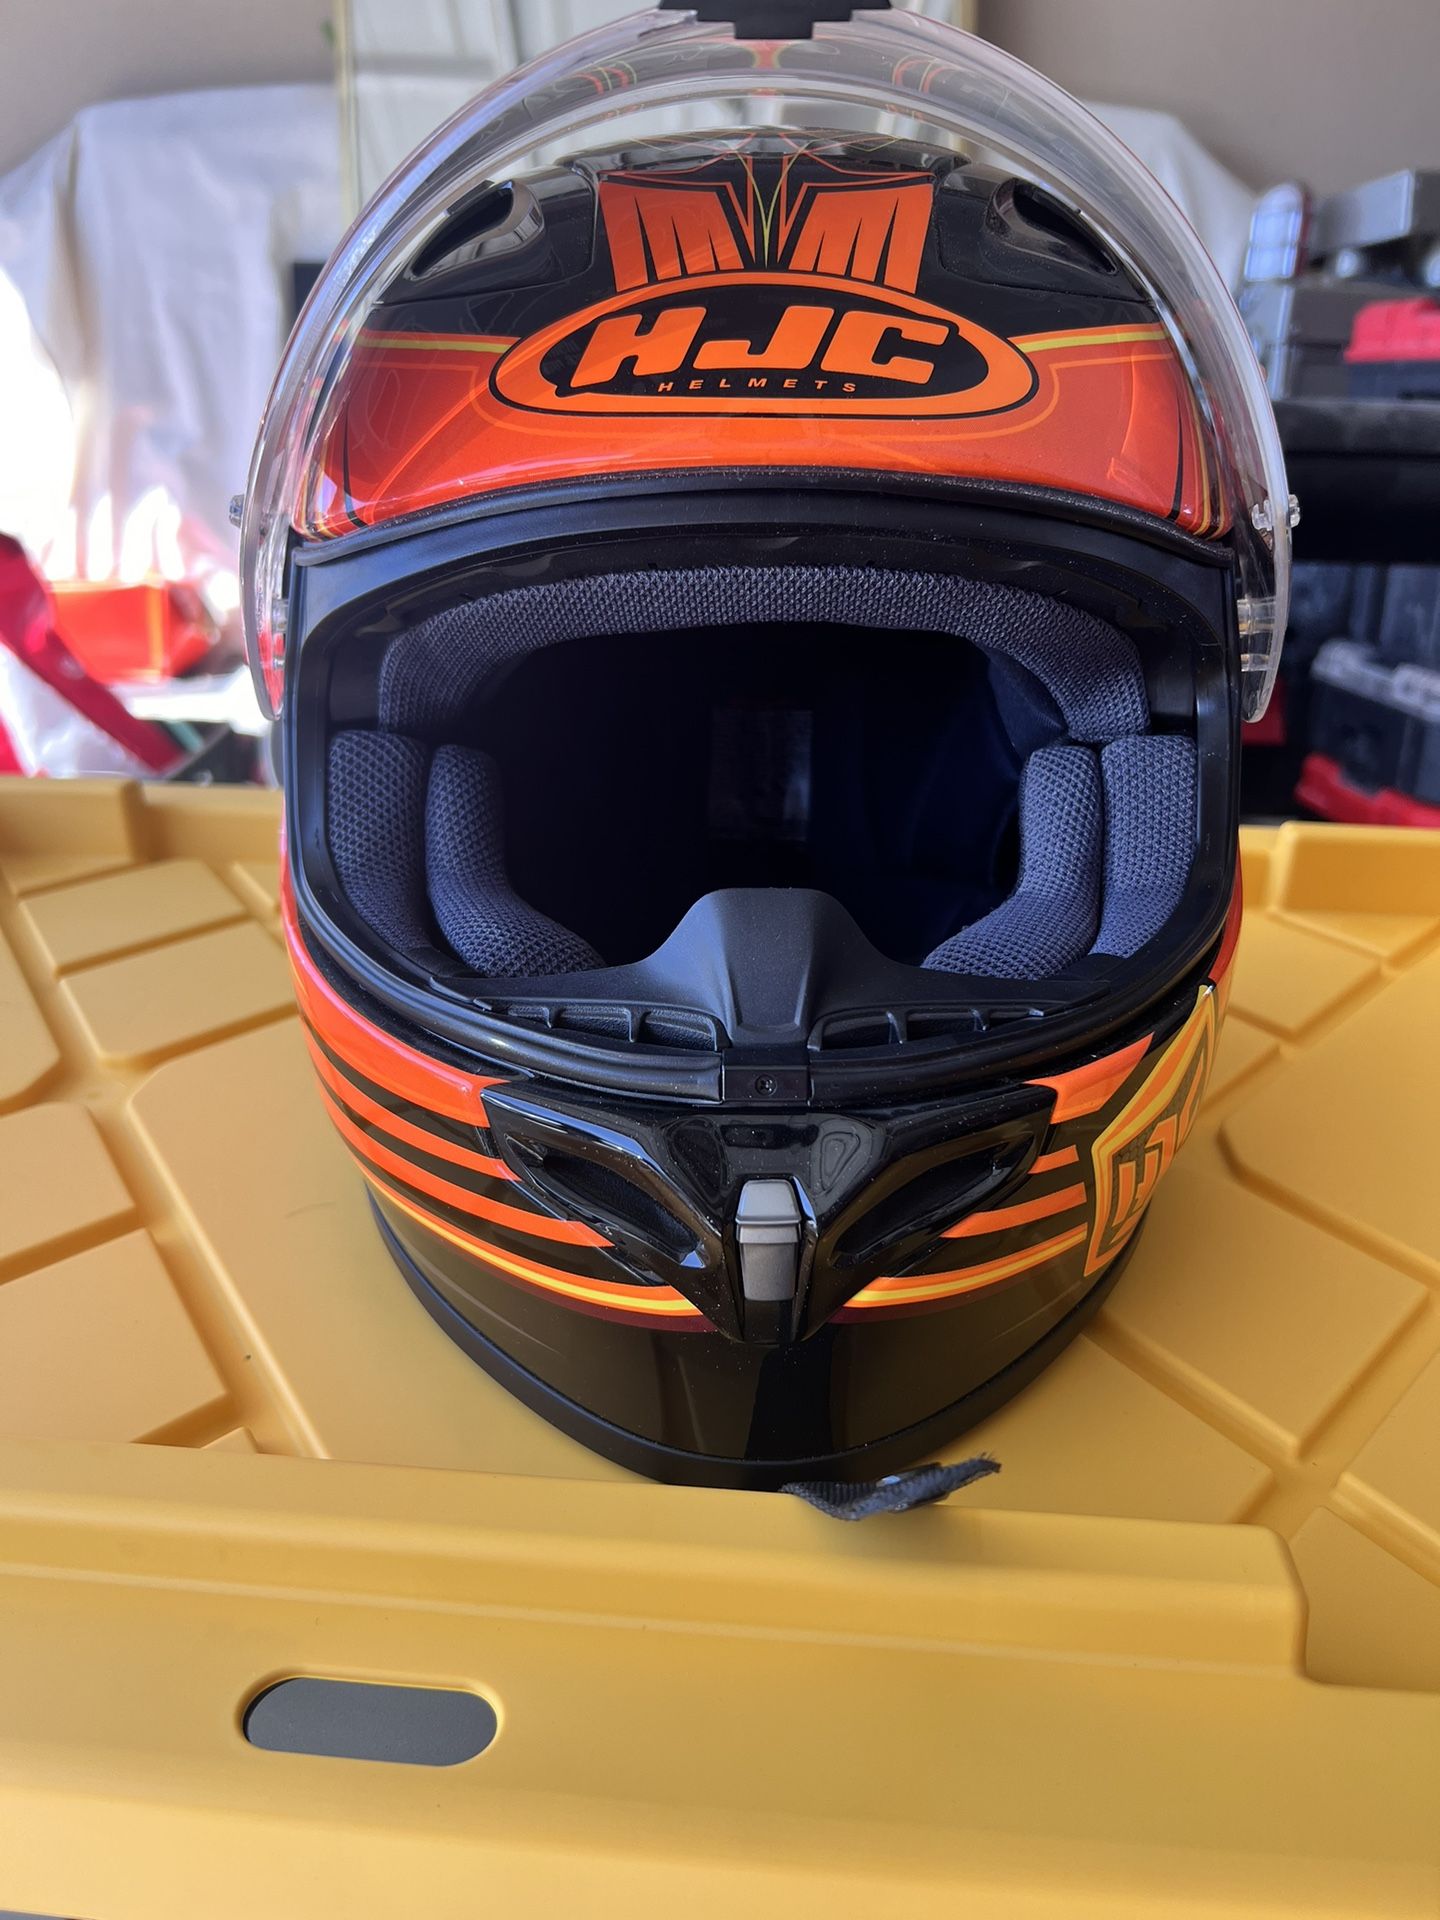 Brand New Motorcycle HJC Helmet